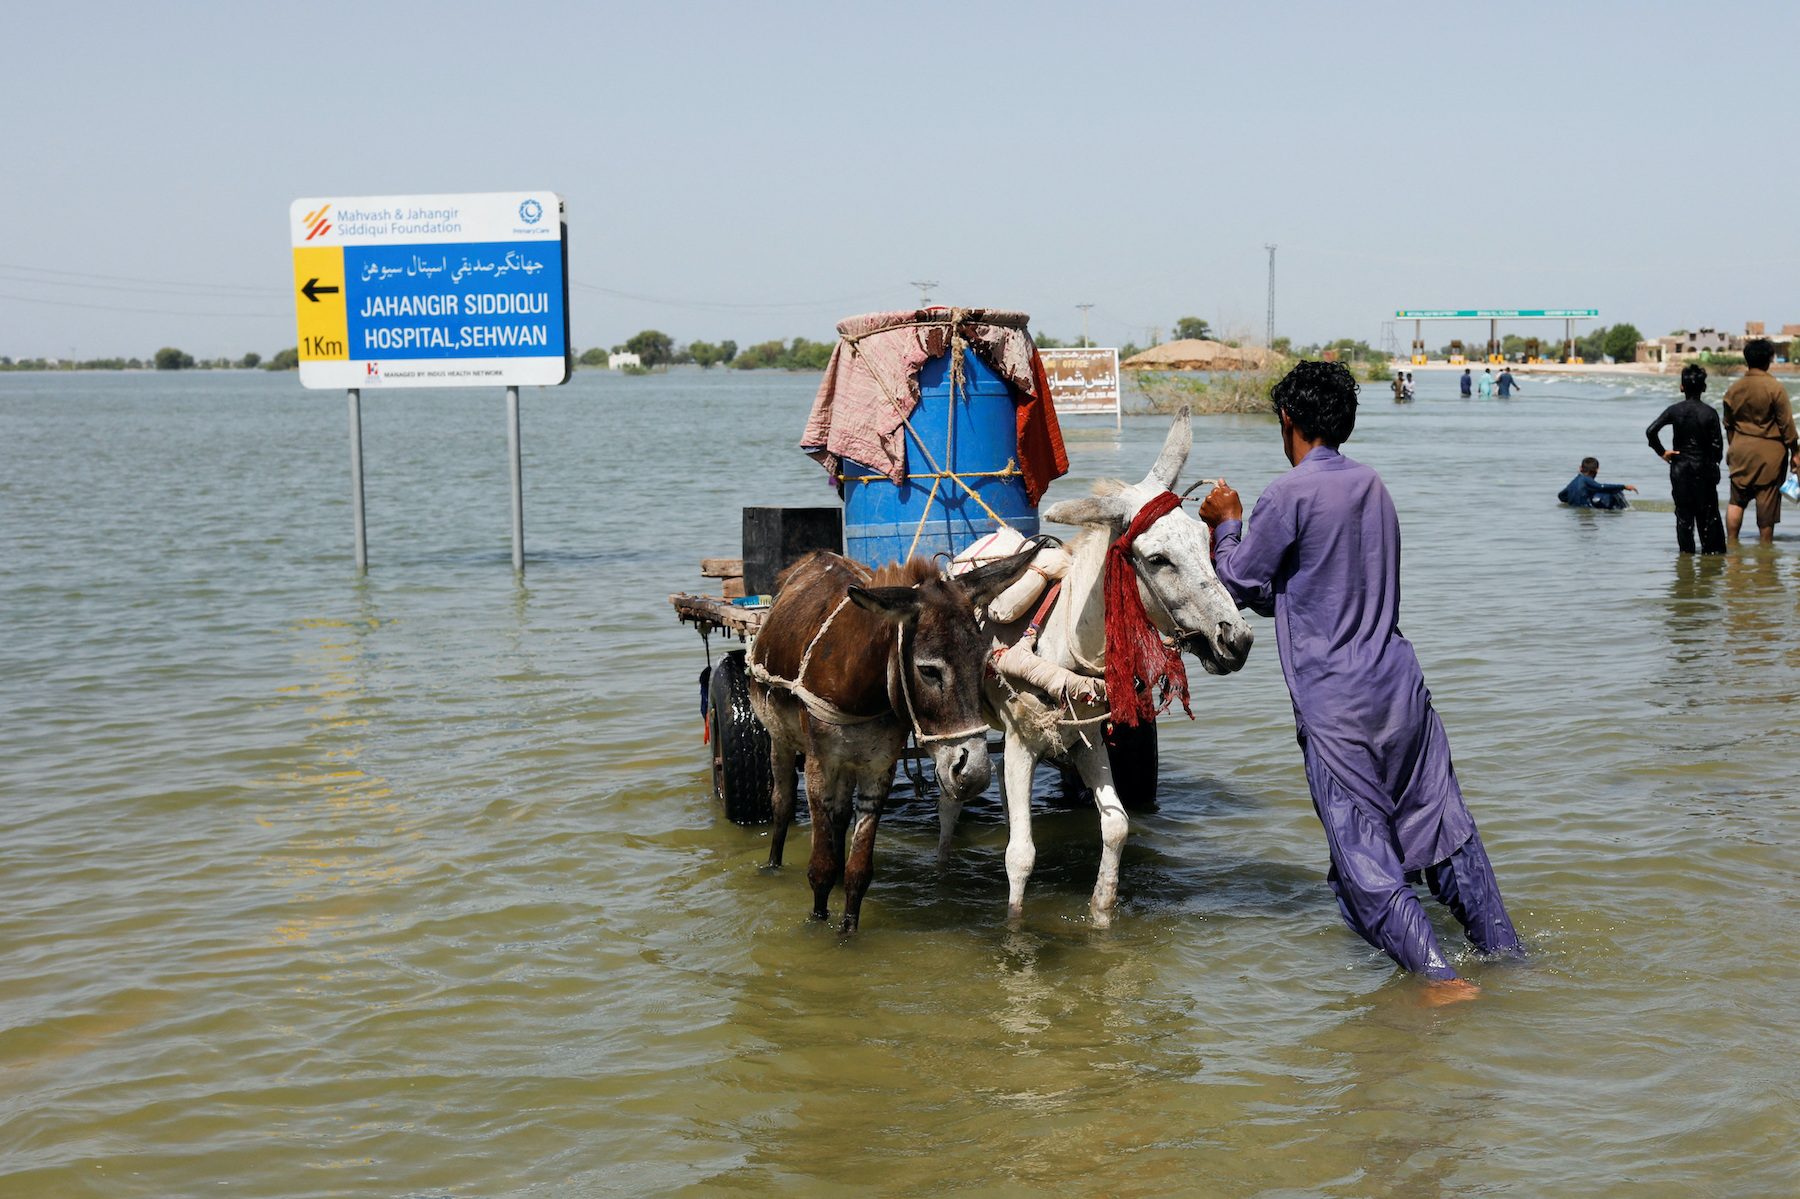 US extends debt relief to Pakistan after floods